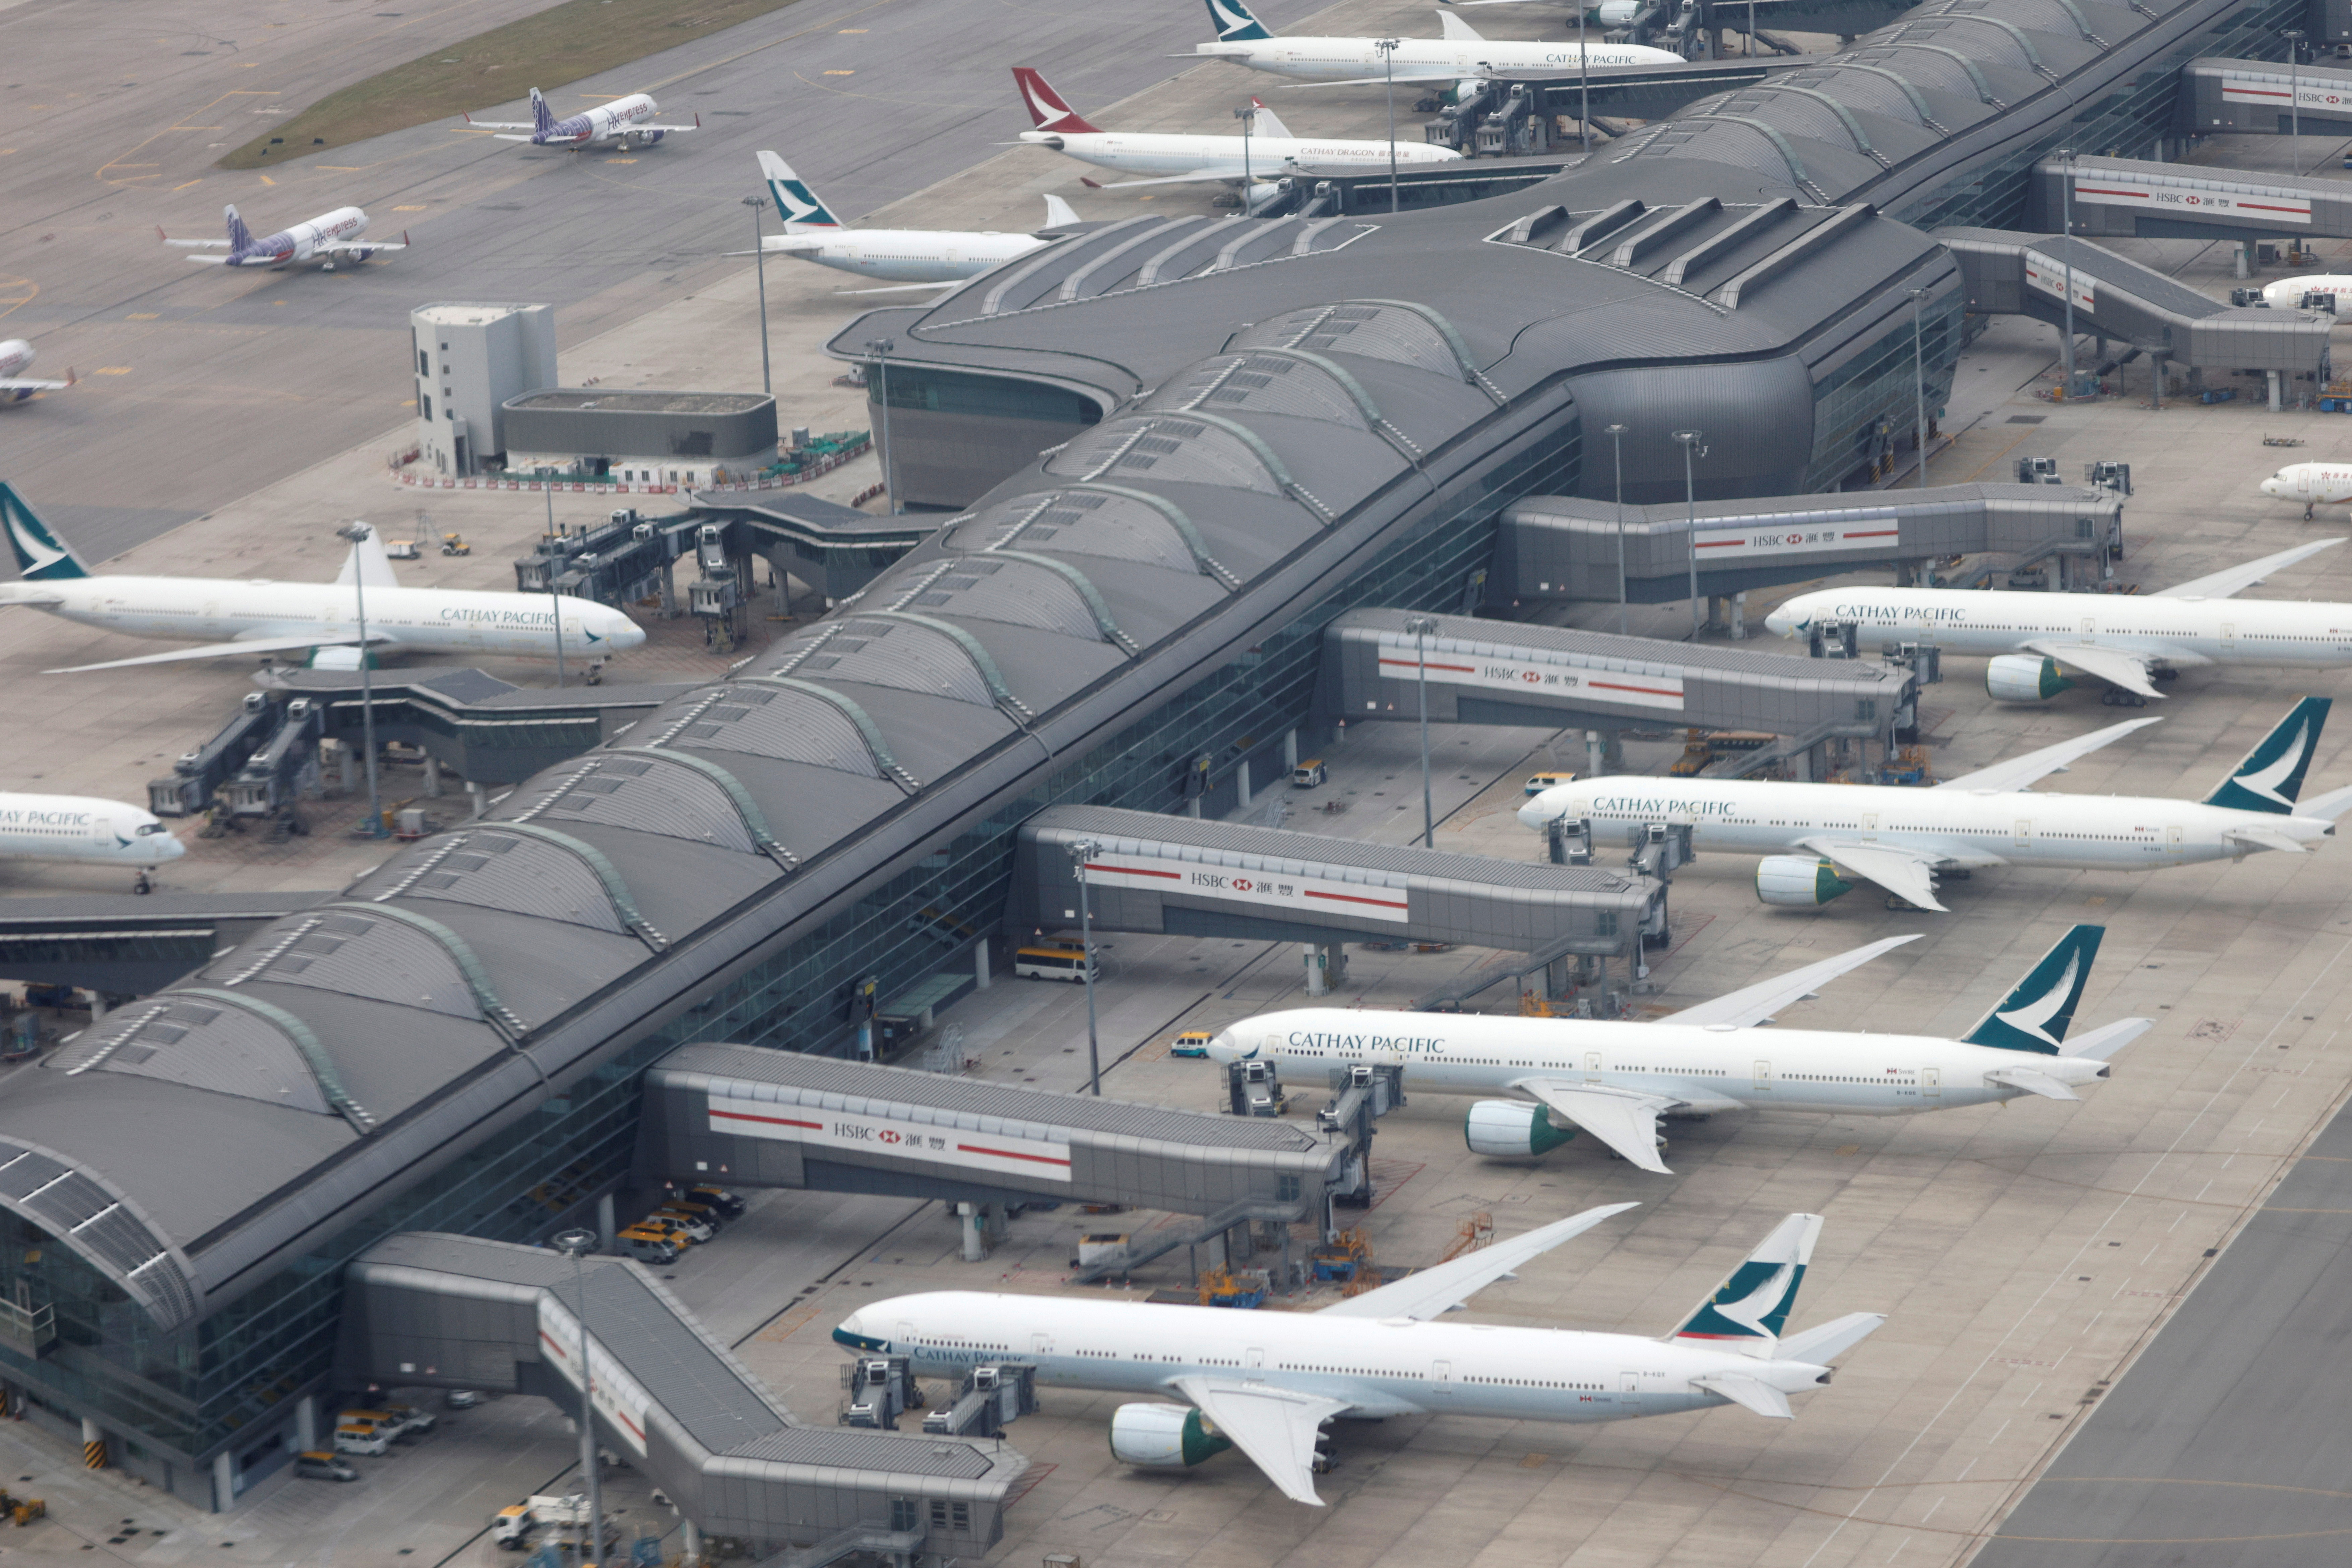 Aircrafts of Cathay Pacific and its regional brand Cathay Dragon are parked on the tarmac at the Hong Kong International Airport, Hong Kong